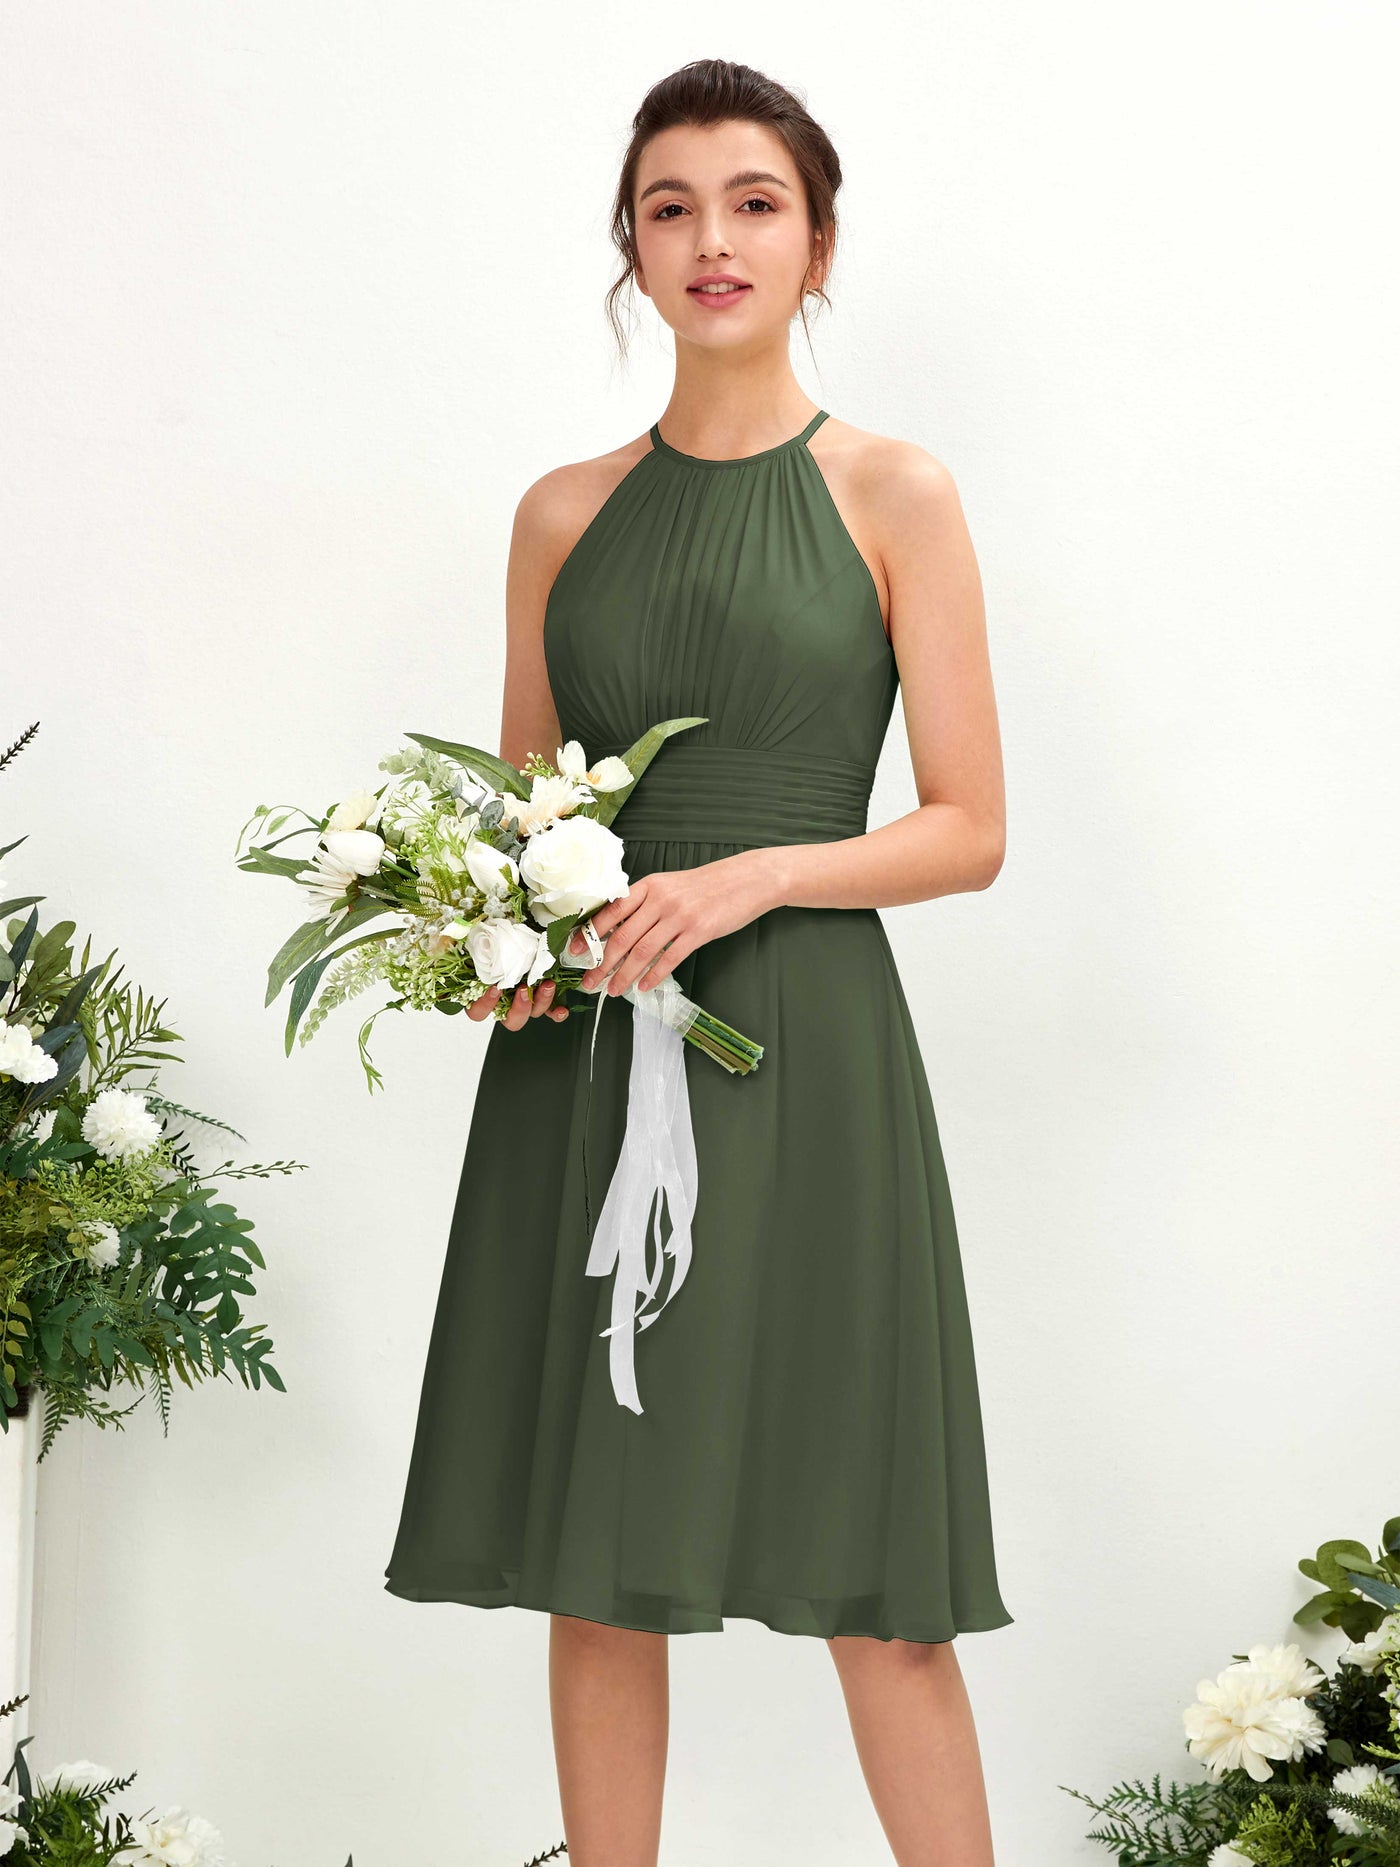 Martini Olive Bridesmaid Dresses Bridesmaid Dress A-line Chiffon Halter Knee Length Sleeveless Wedding Party Dress (81220107)#color_martini-olive